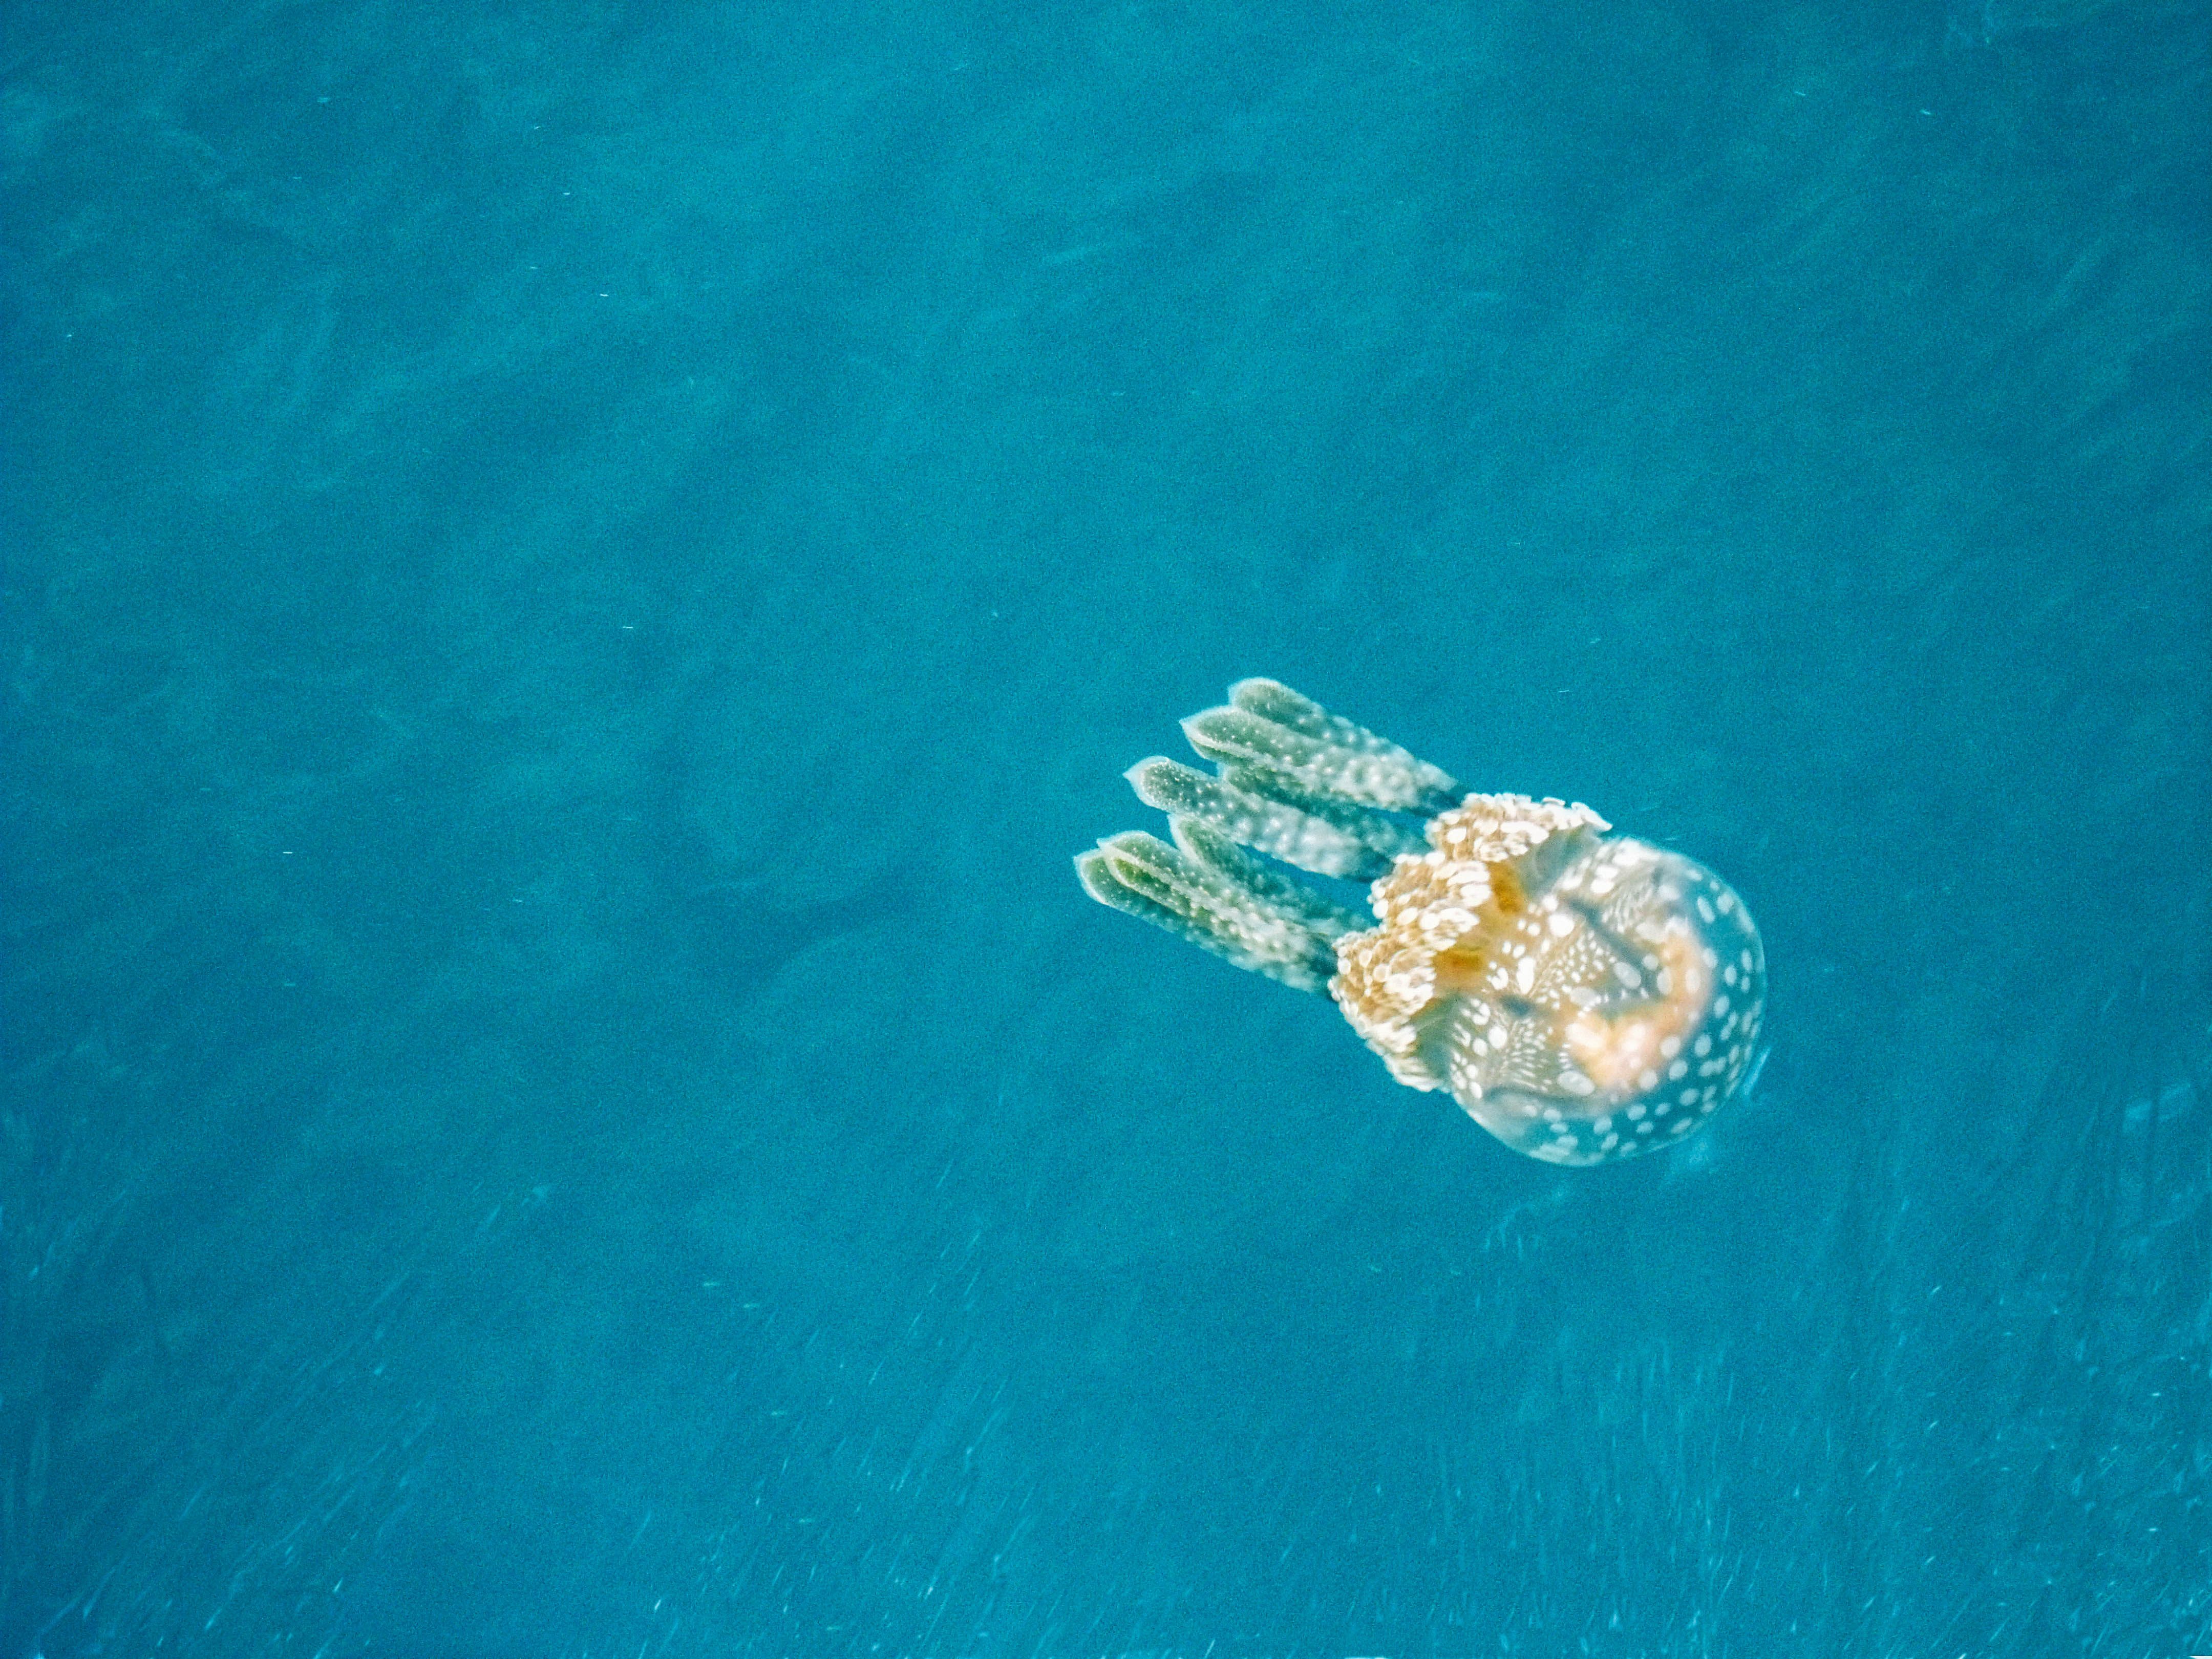 NATURE'S WONDER. The stingless jellyfish swimming in Bucas Grande. Photo by Jeffrey Riles/www.TravelingMorion.com 